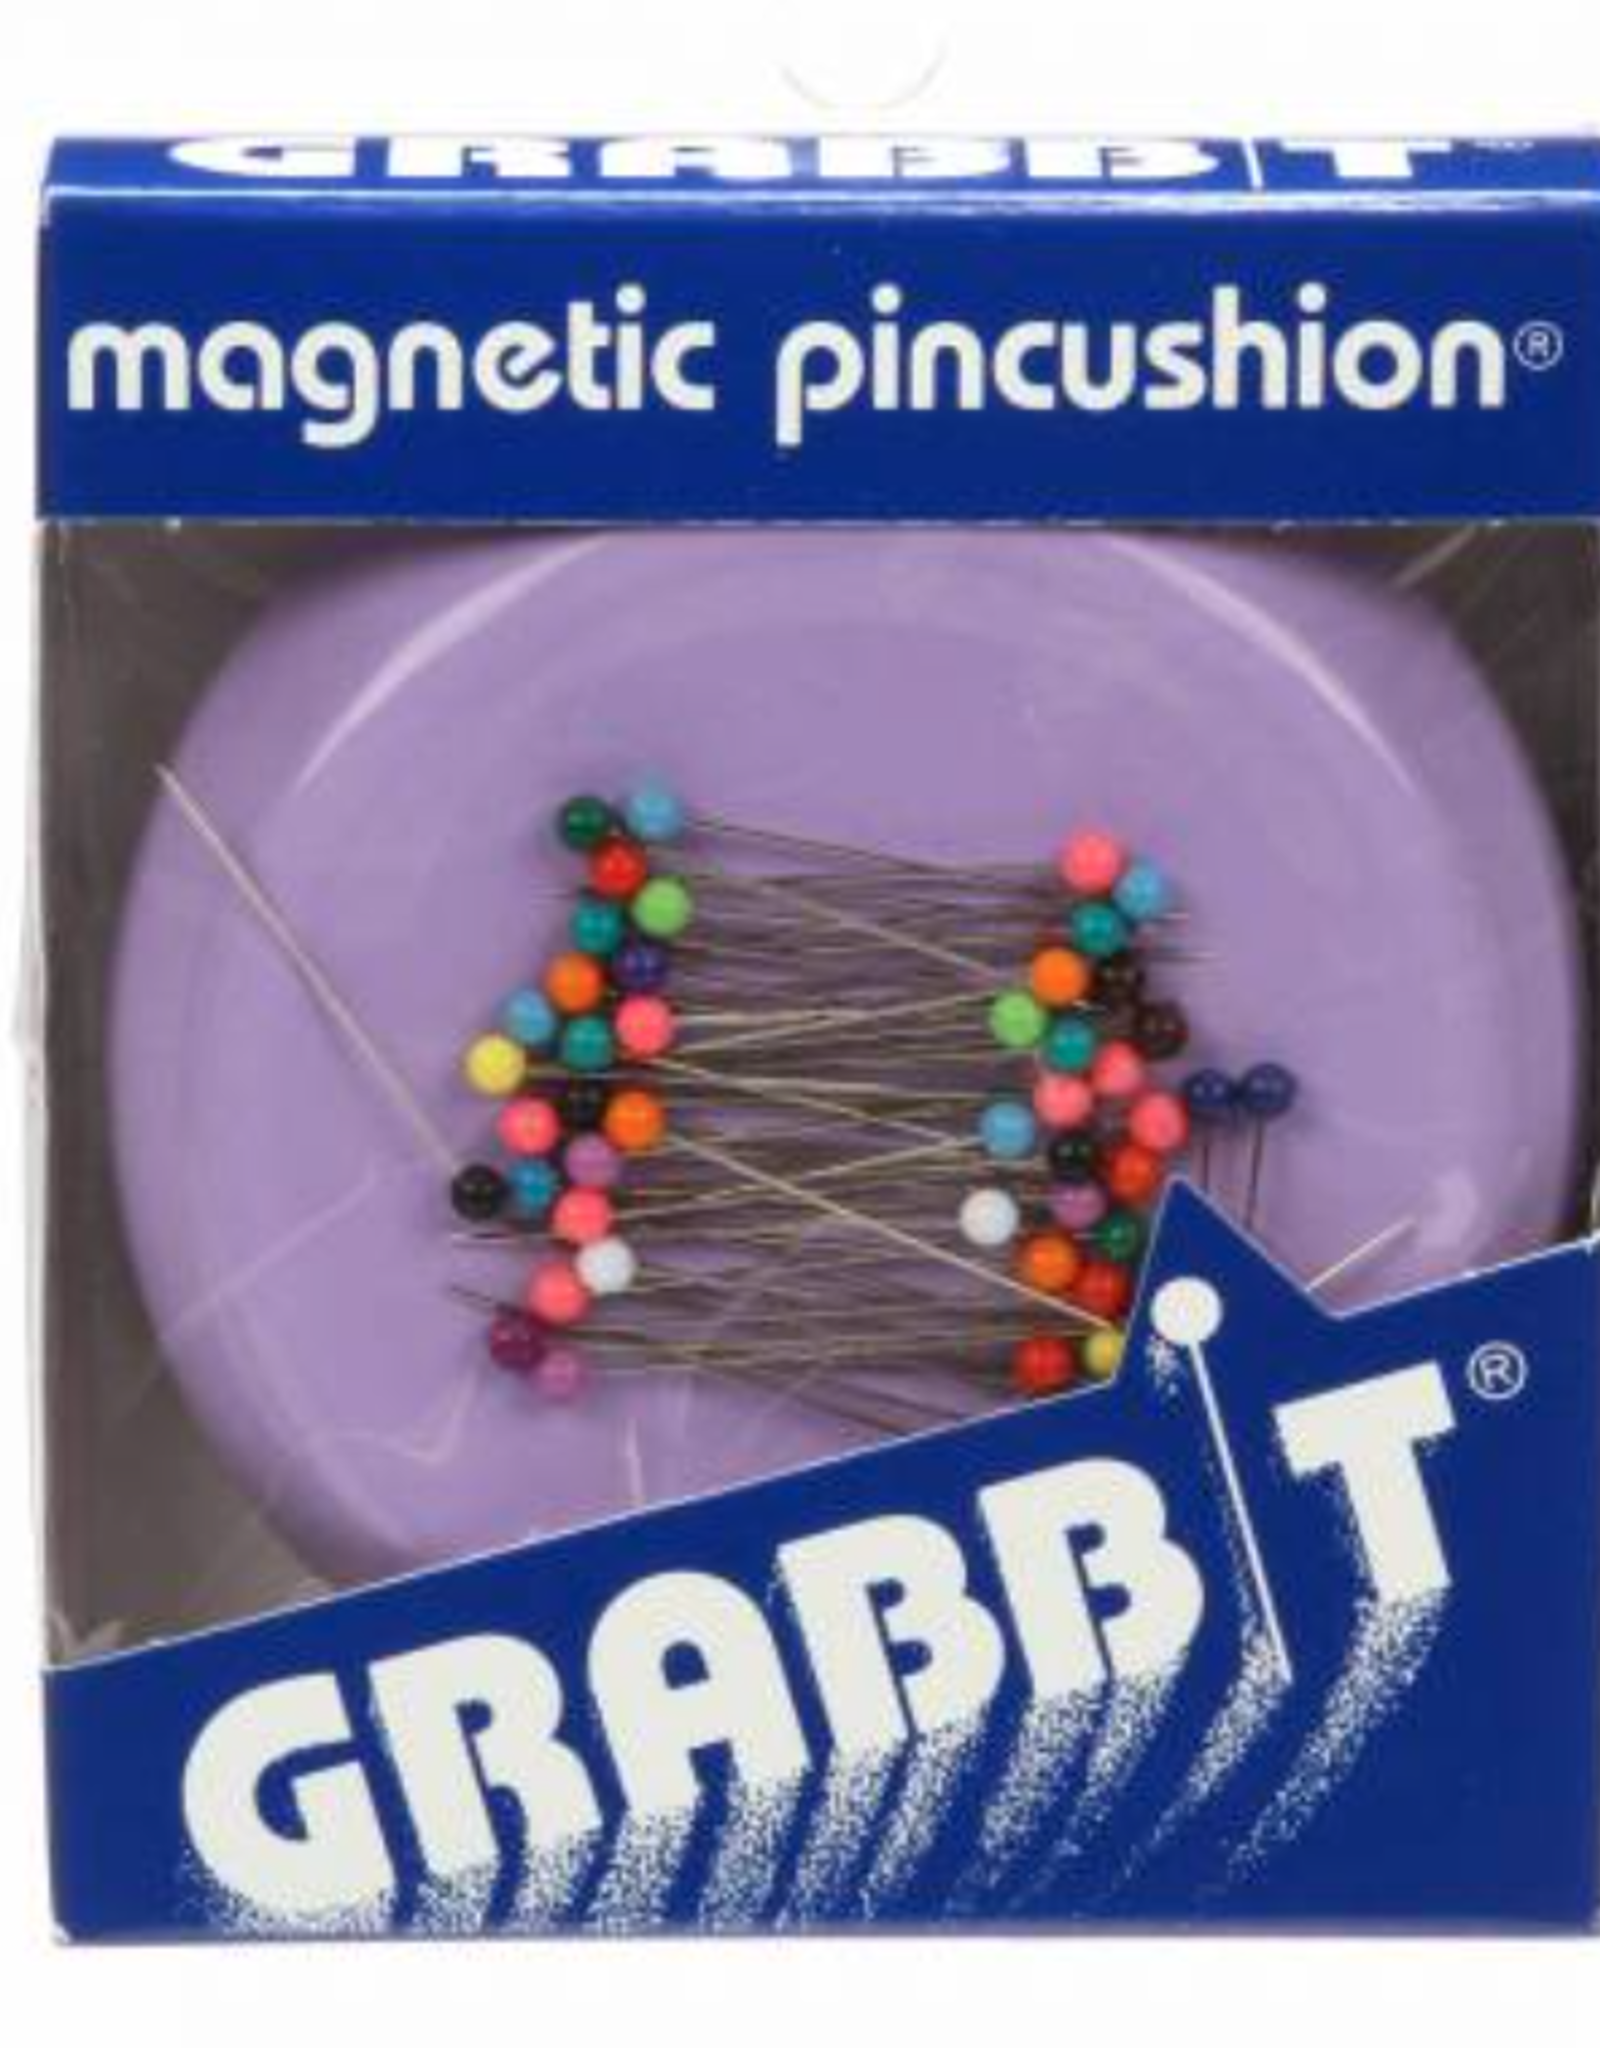 Euro Notions Grabbit Magnetic Pincushion Lavender